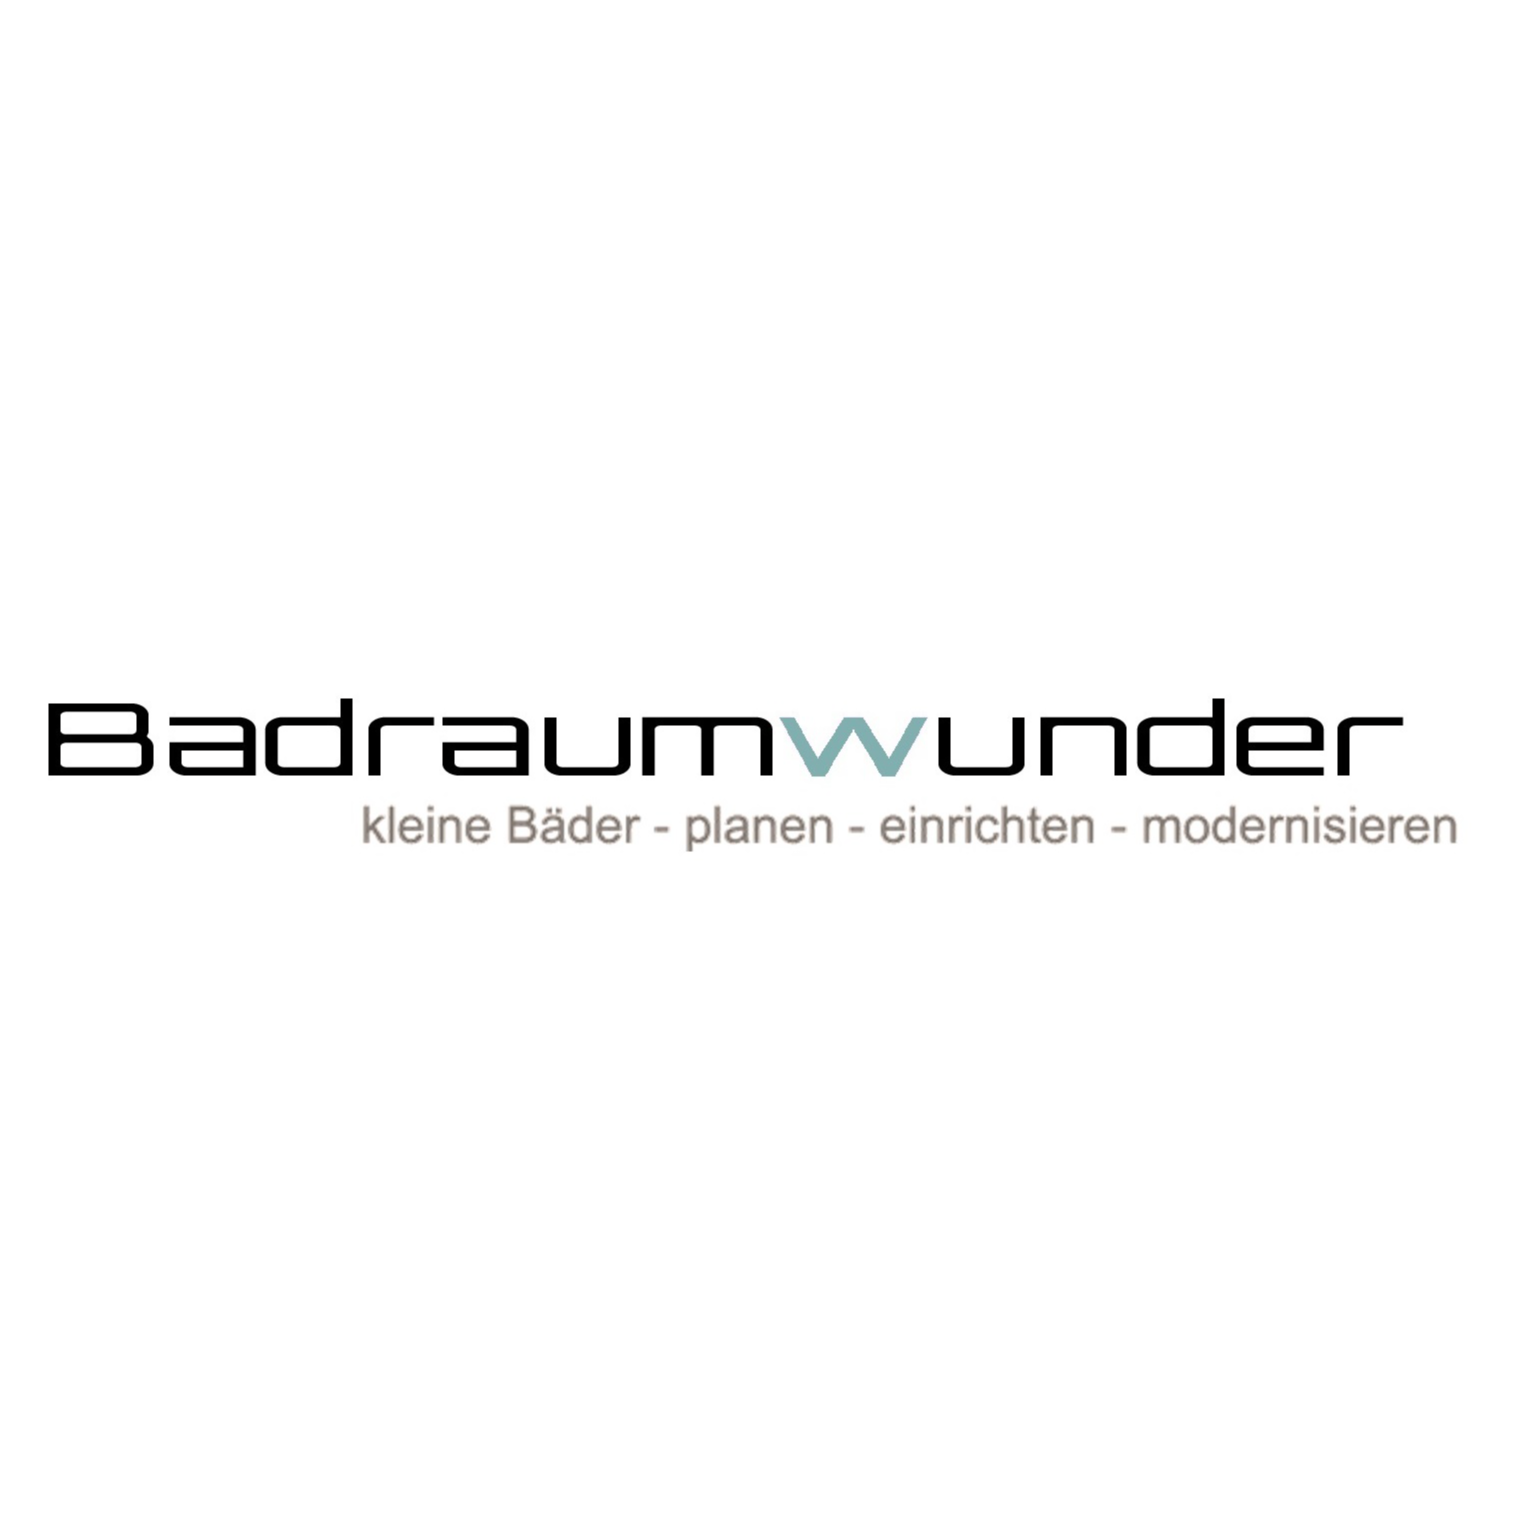 Badraumwunder in Wiesbaden - Logo